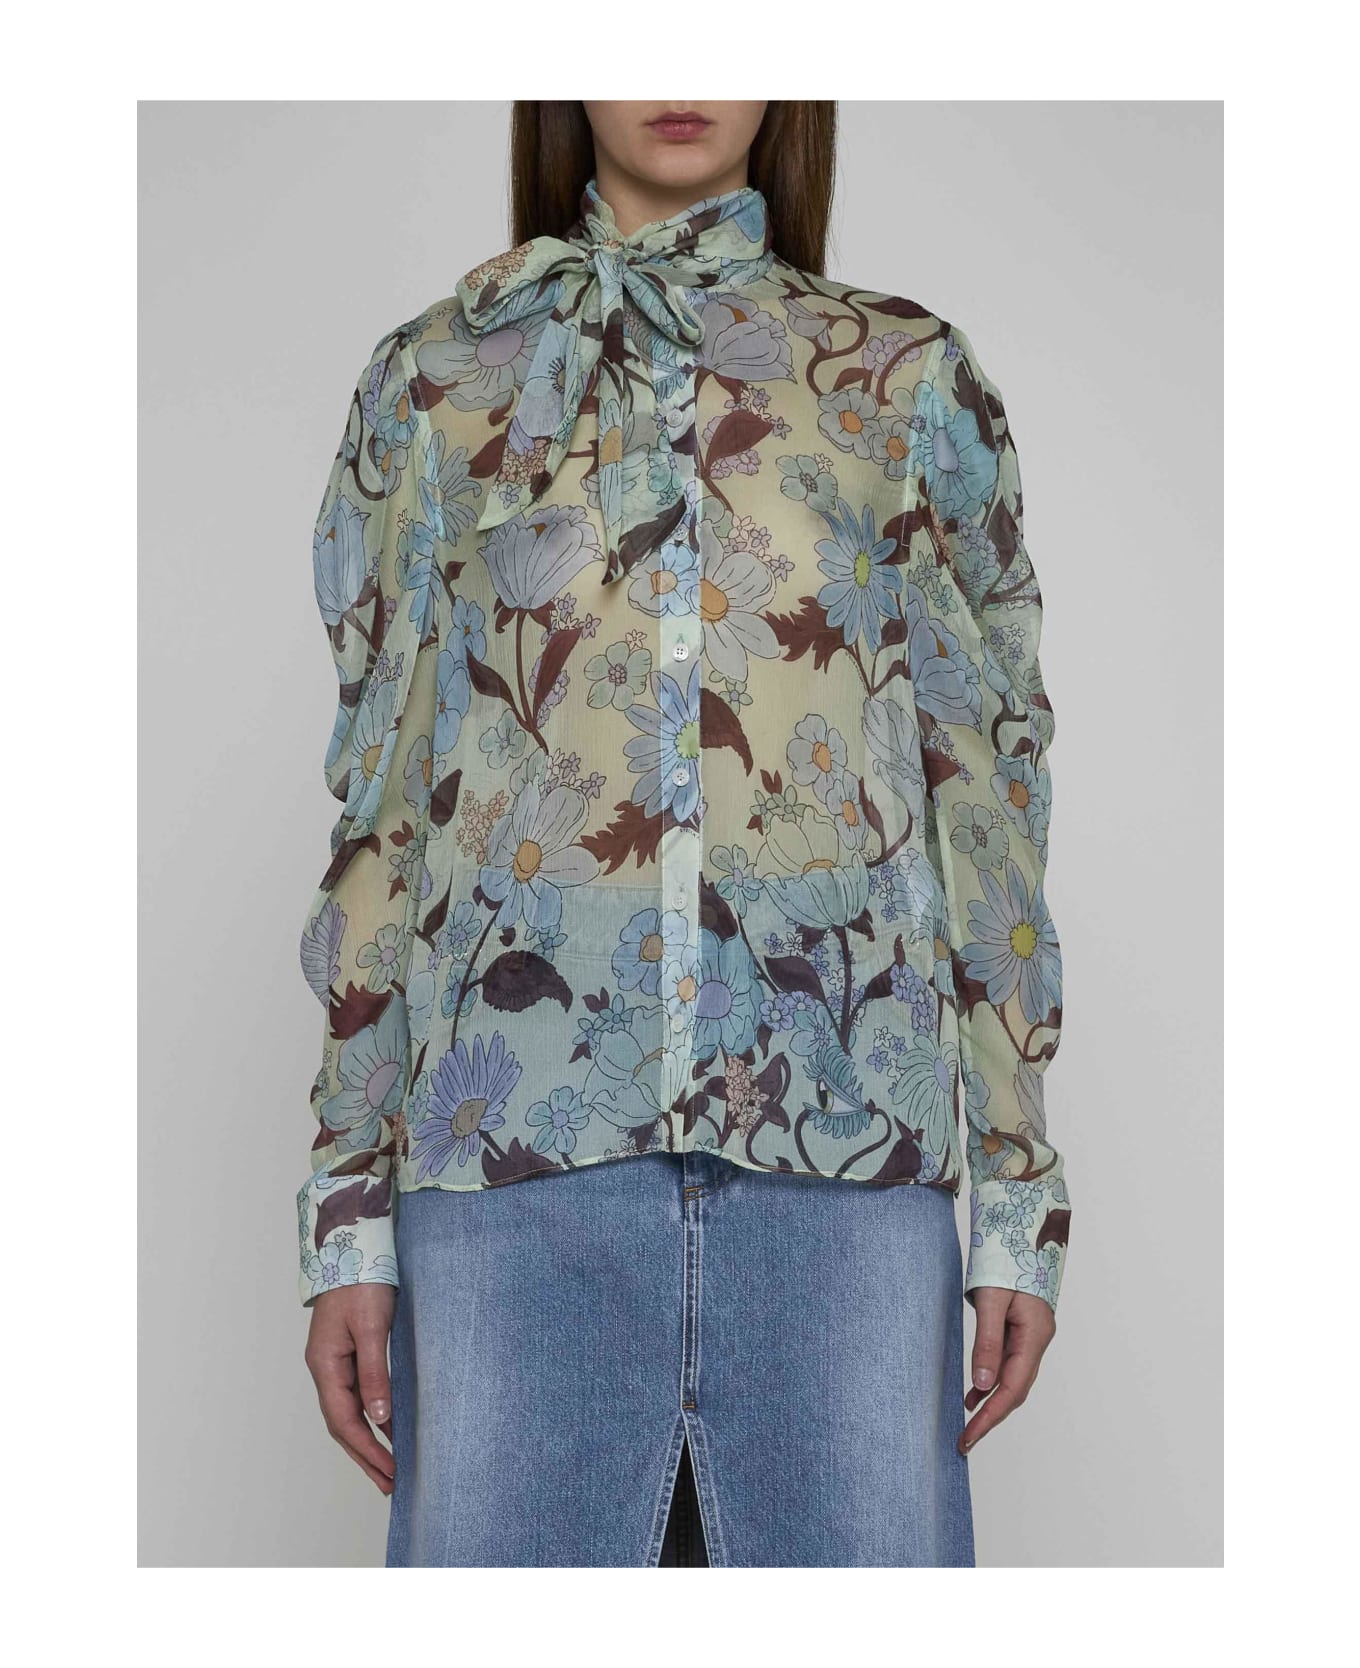 Stella McCartney Floral Print Silk Shirt - Multicolor mint